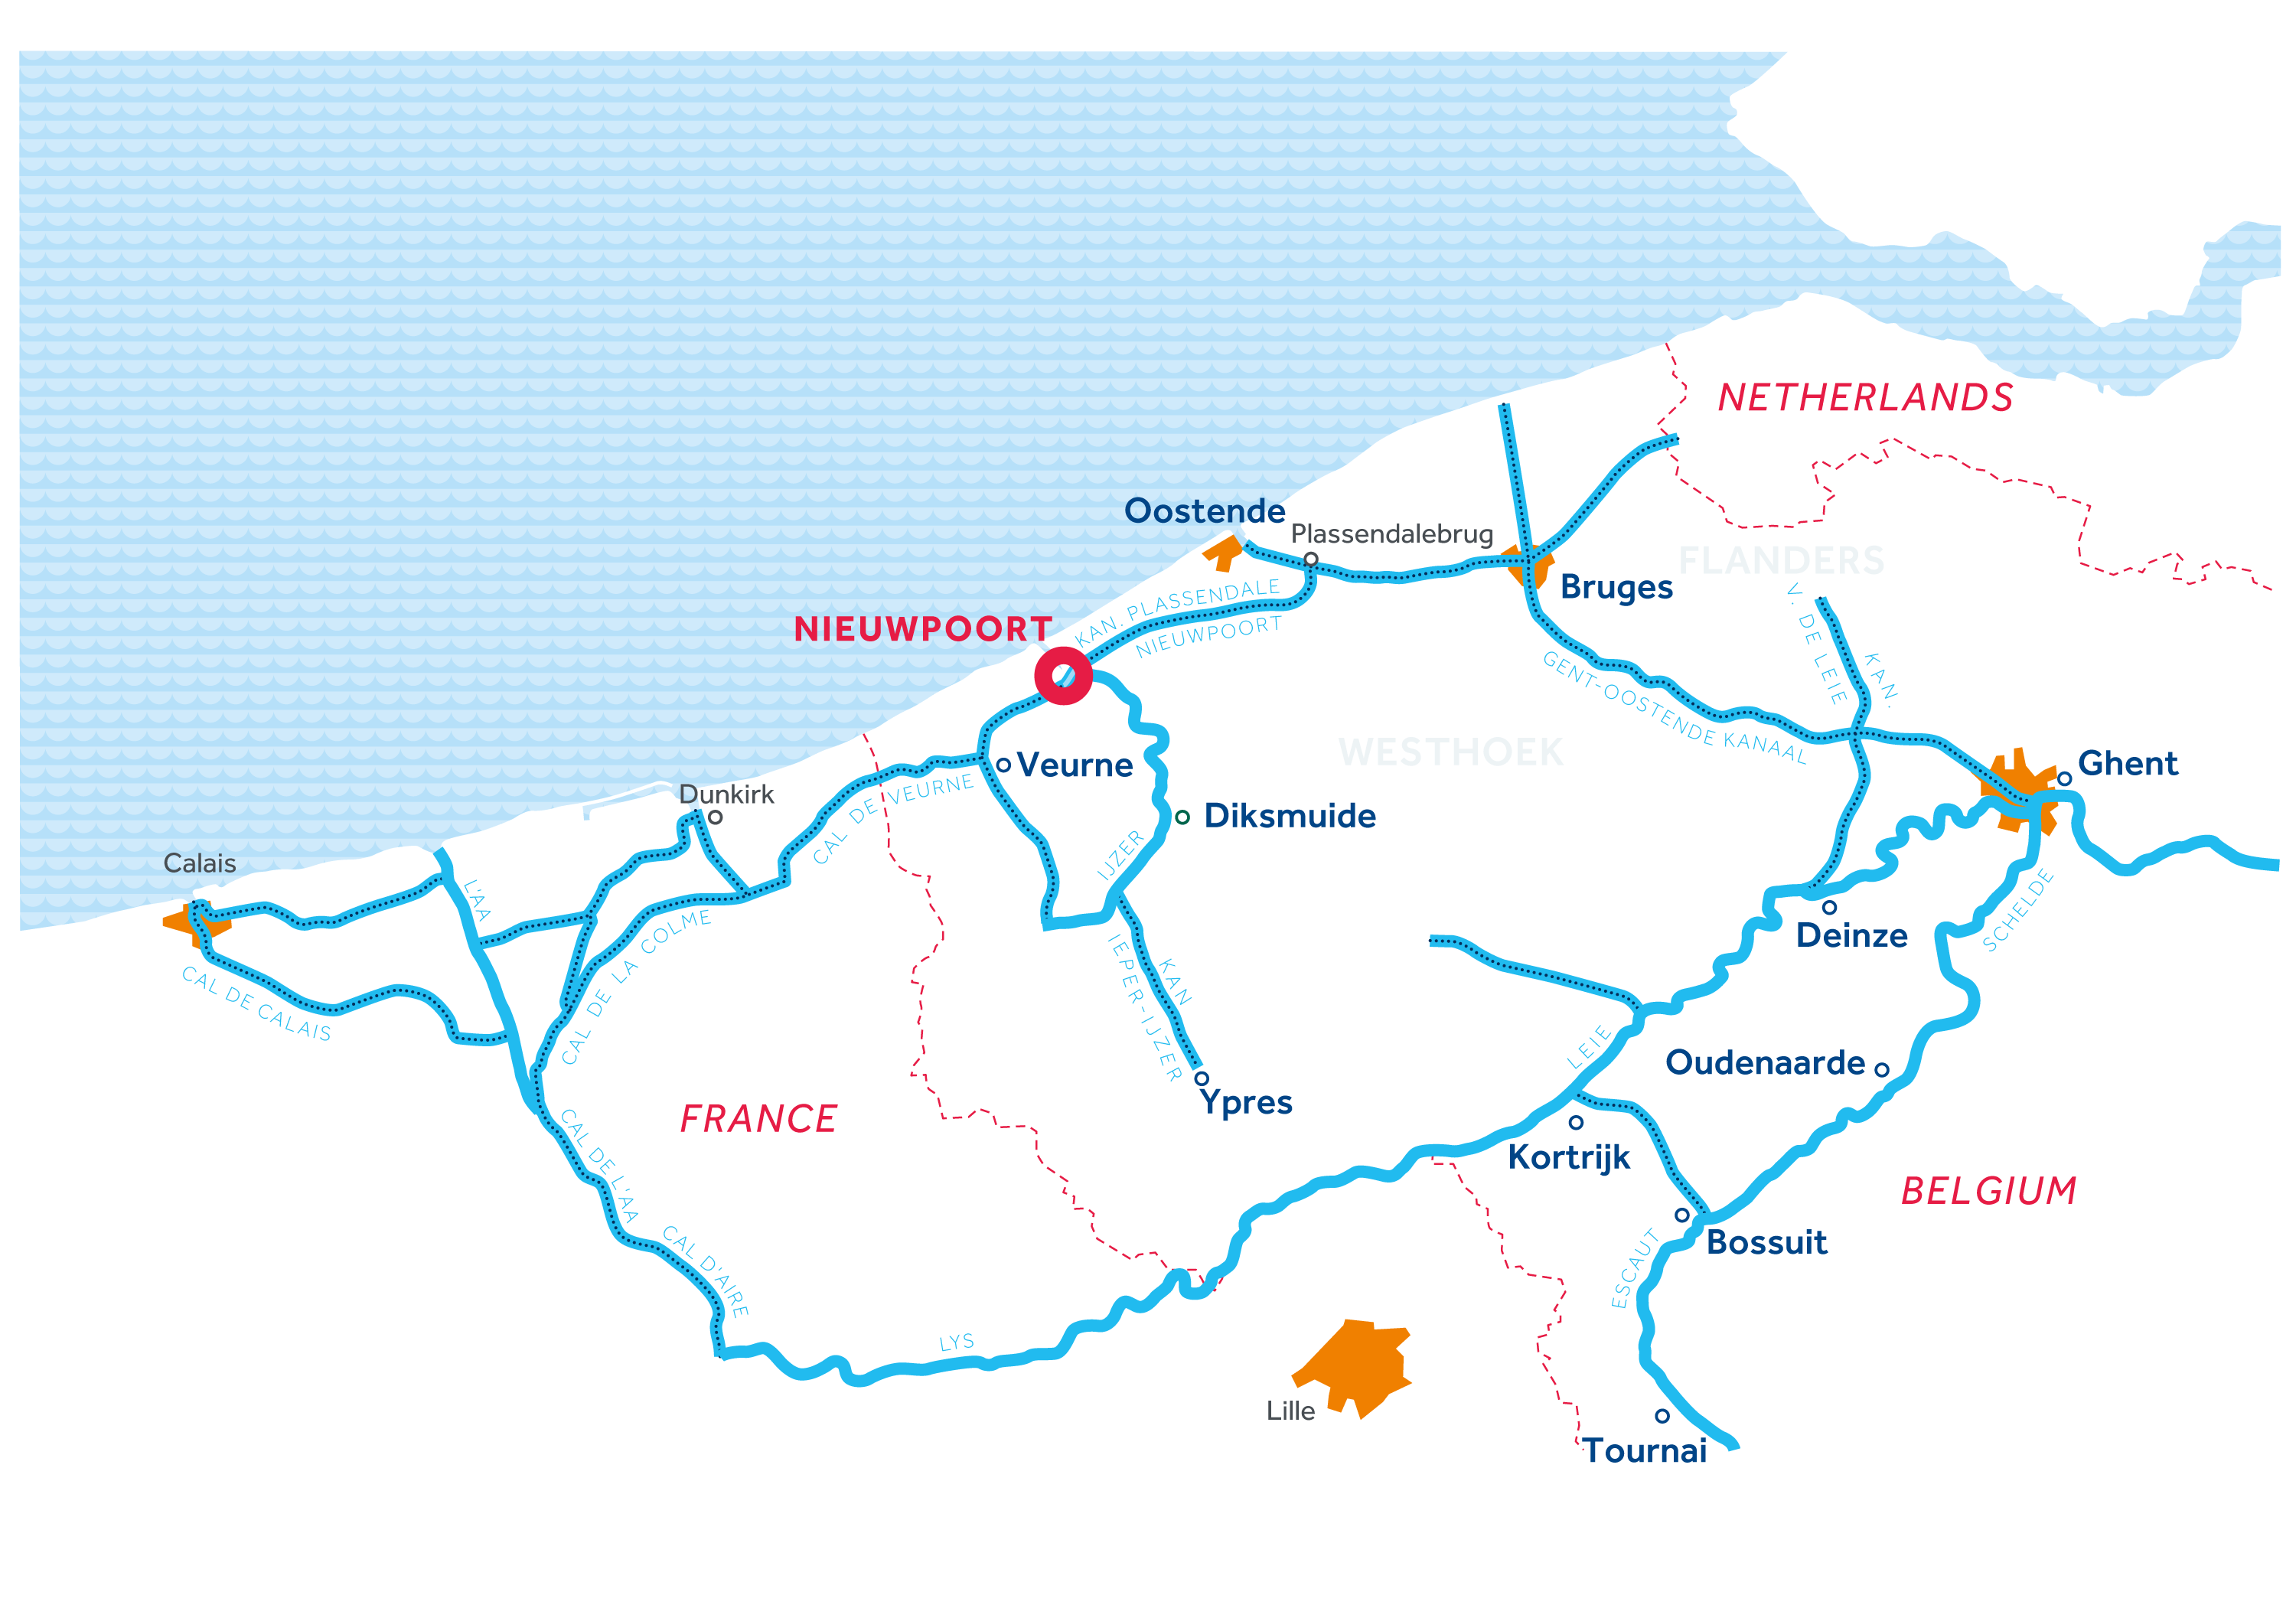 Flanders Region map